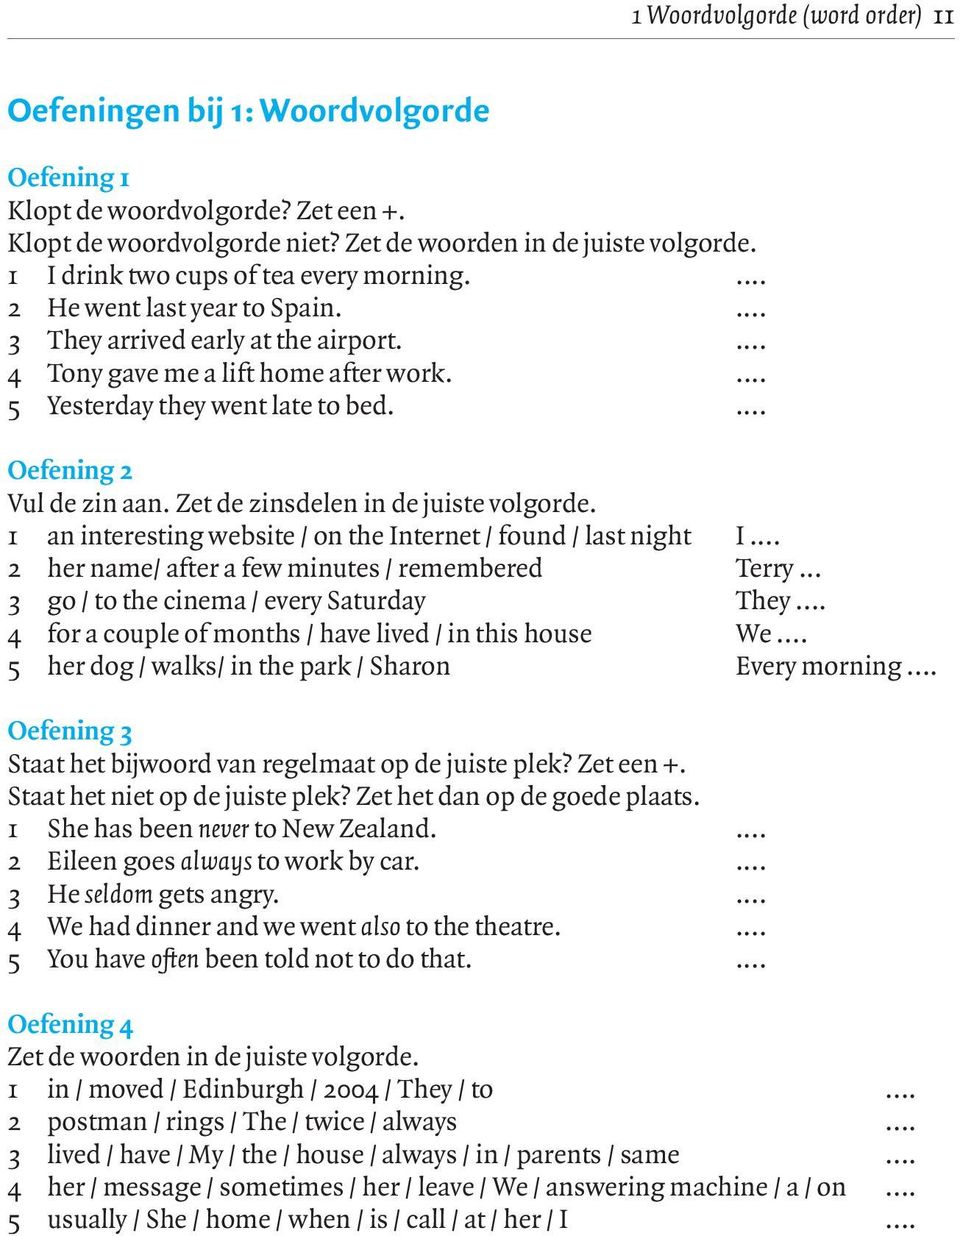 Prisma Taalbeheersing. Basisgrammatica. Engels. voor iedereen. Johan Zonnenberg PDF Free Download